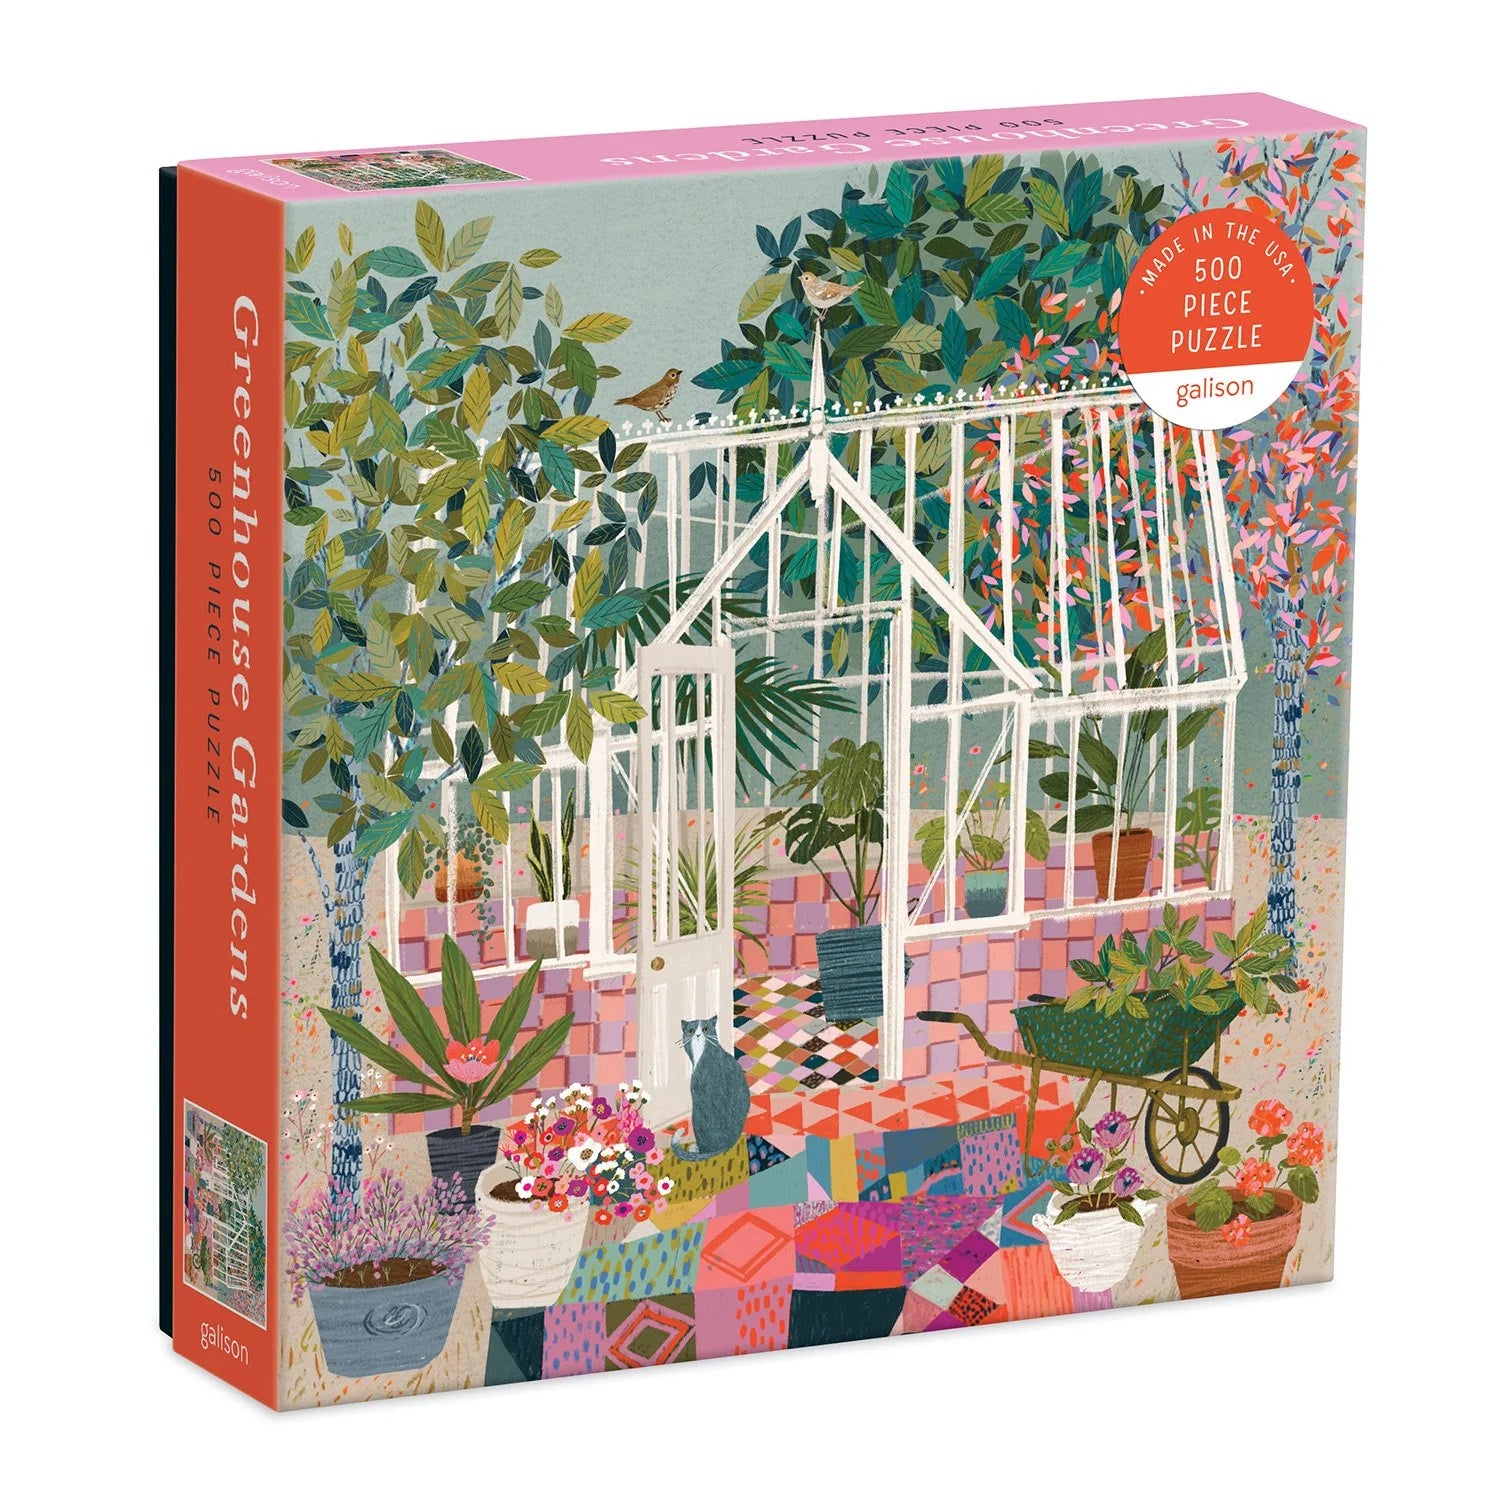 Greenhouse Gardens Puzzle